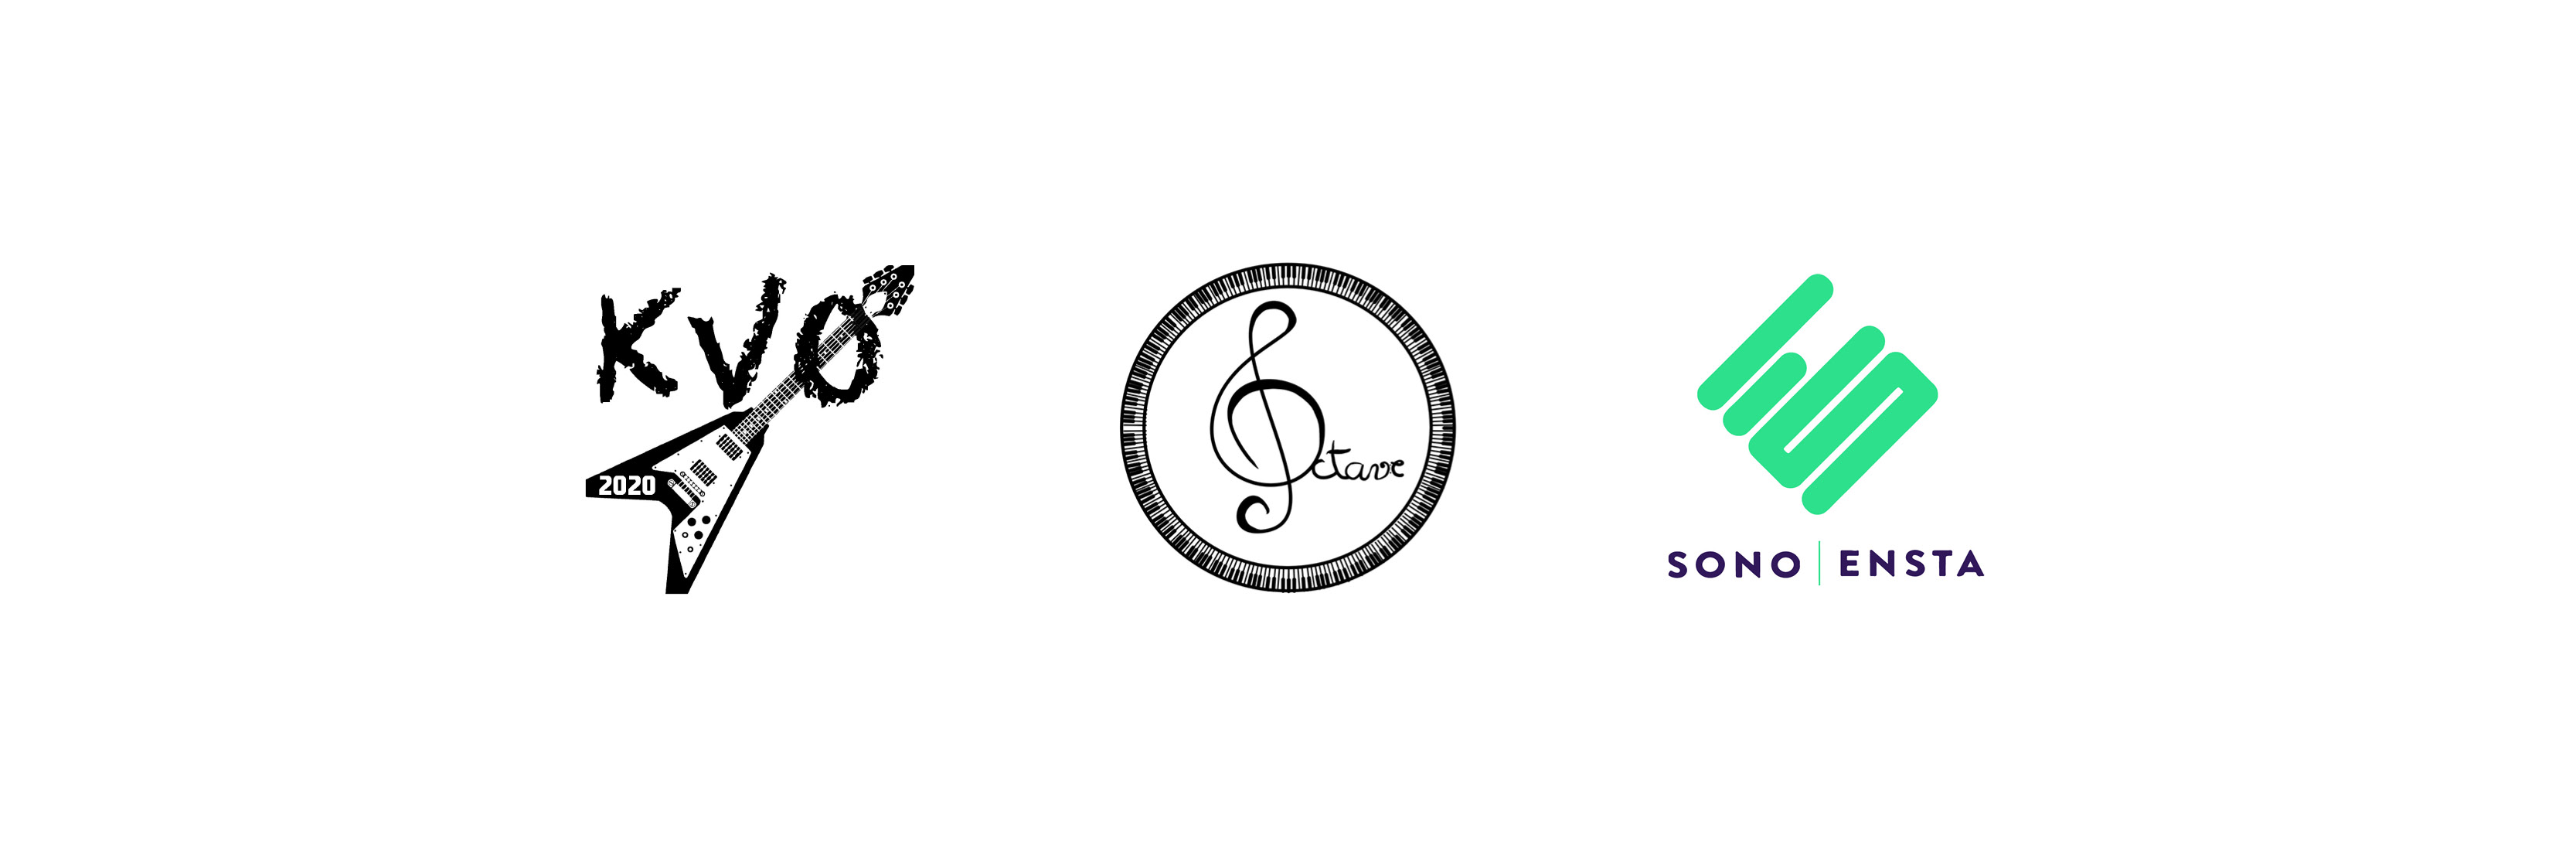 logos assos musique